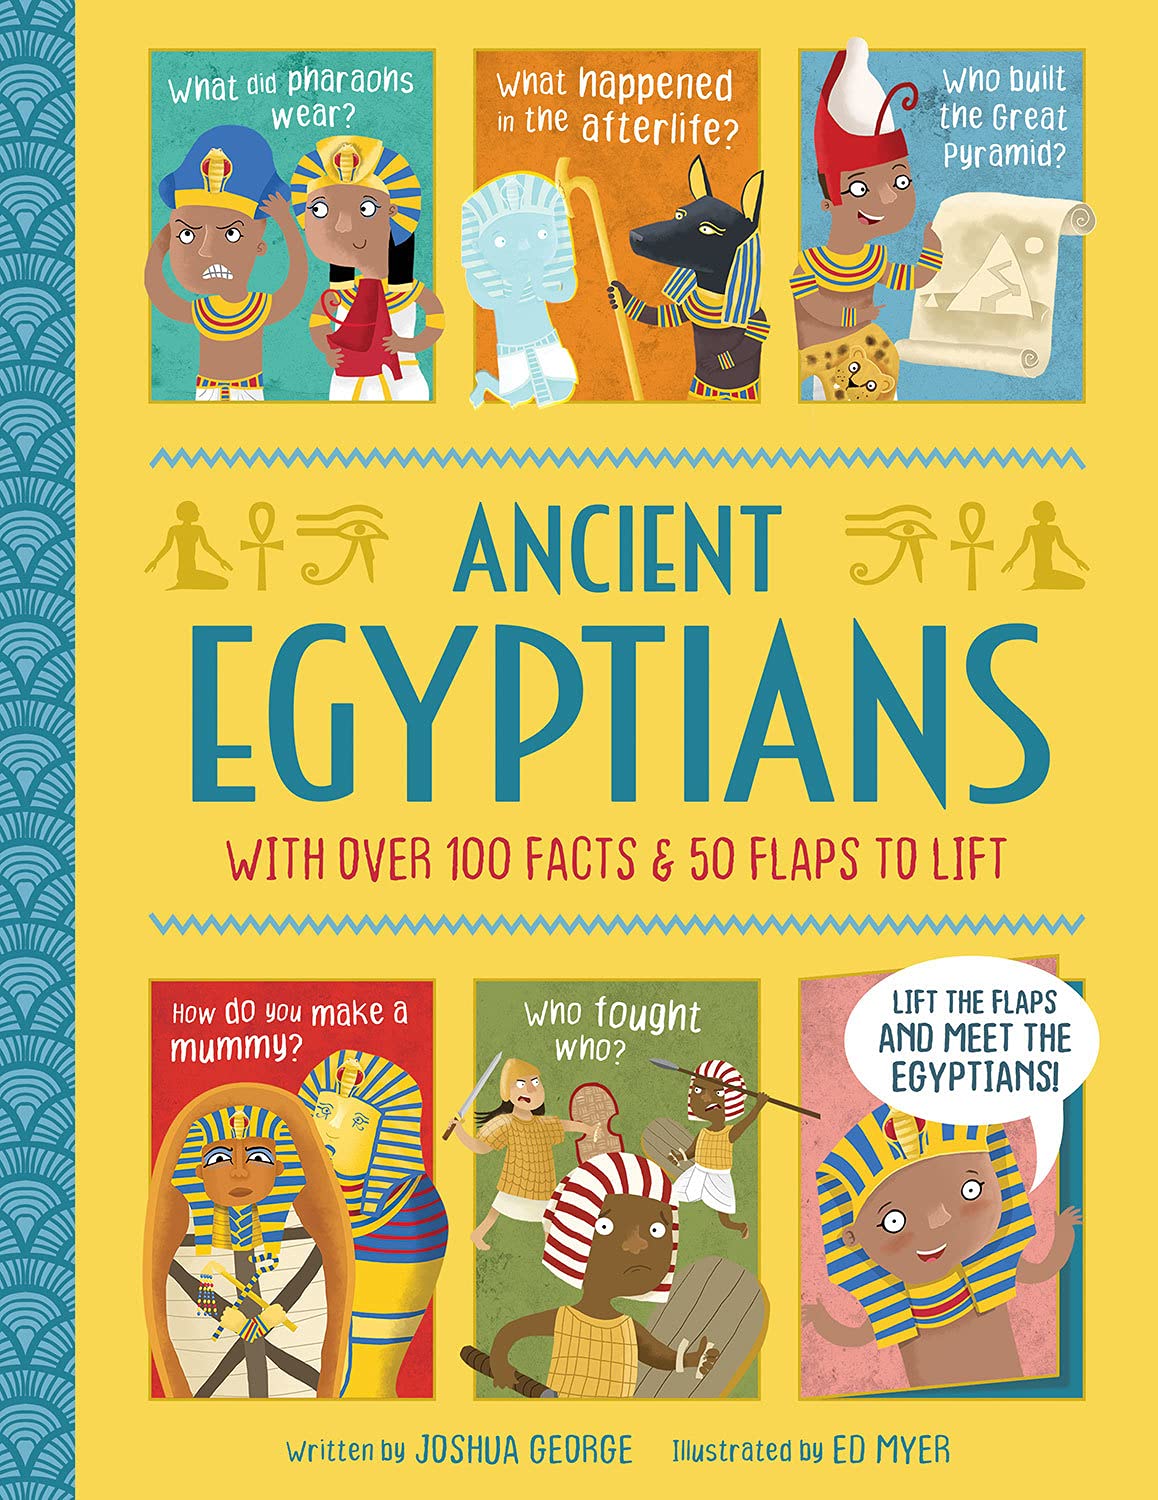 Sách lật mở tương tác - Ancient Egyptians Interactive History Book for Kids